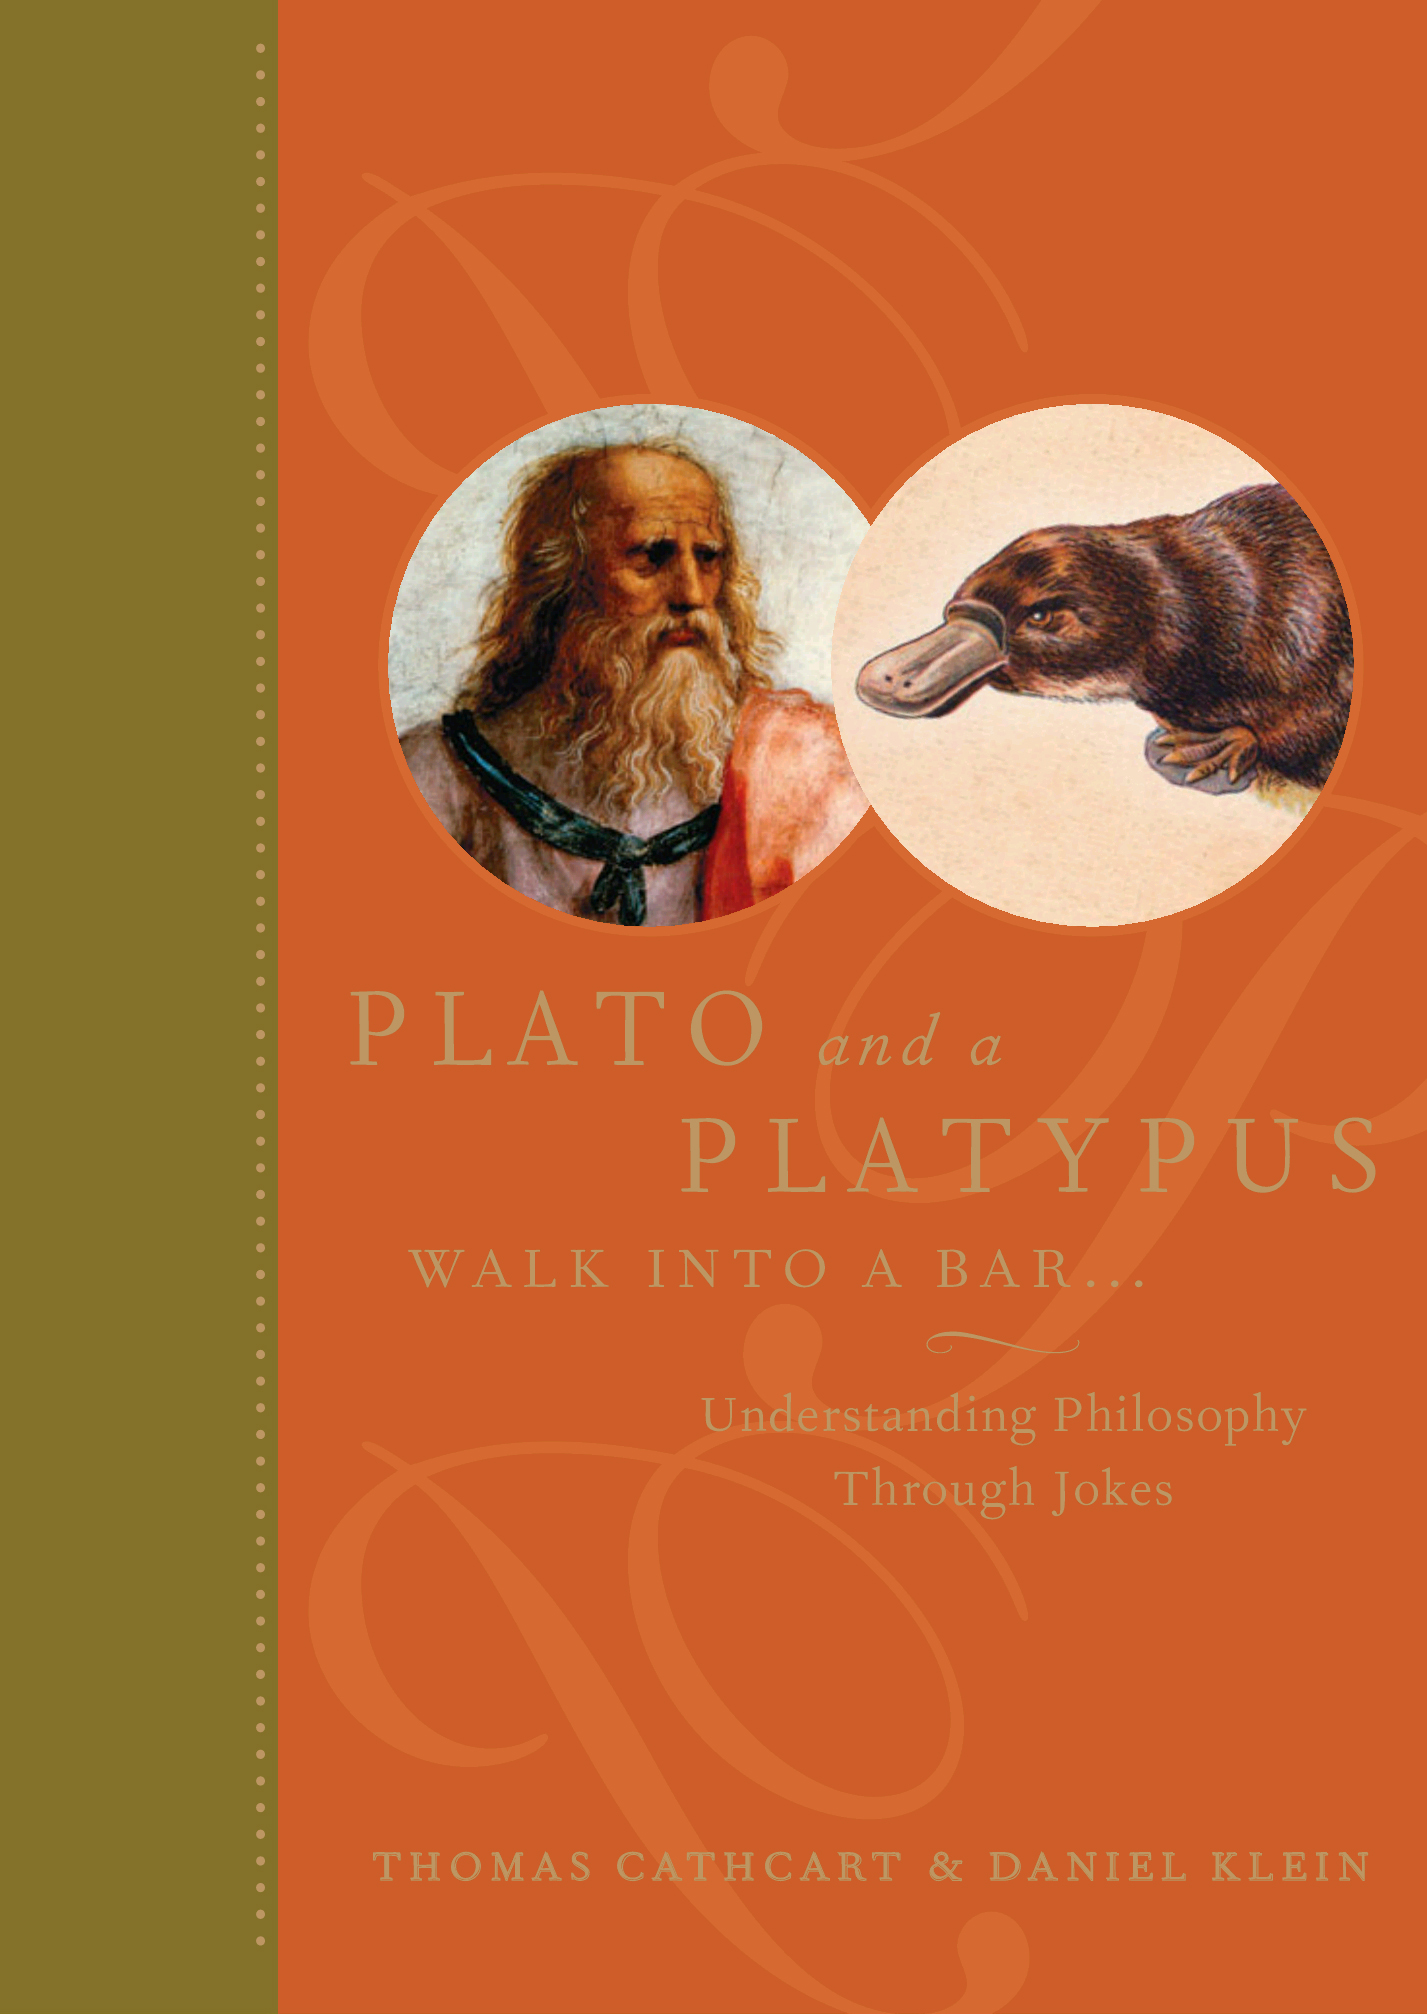 Plato and a Platypus Walk Into a Bar by Thomas Cathcart